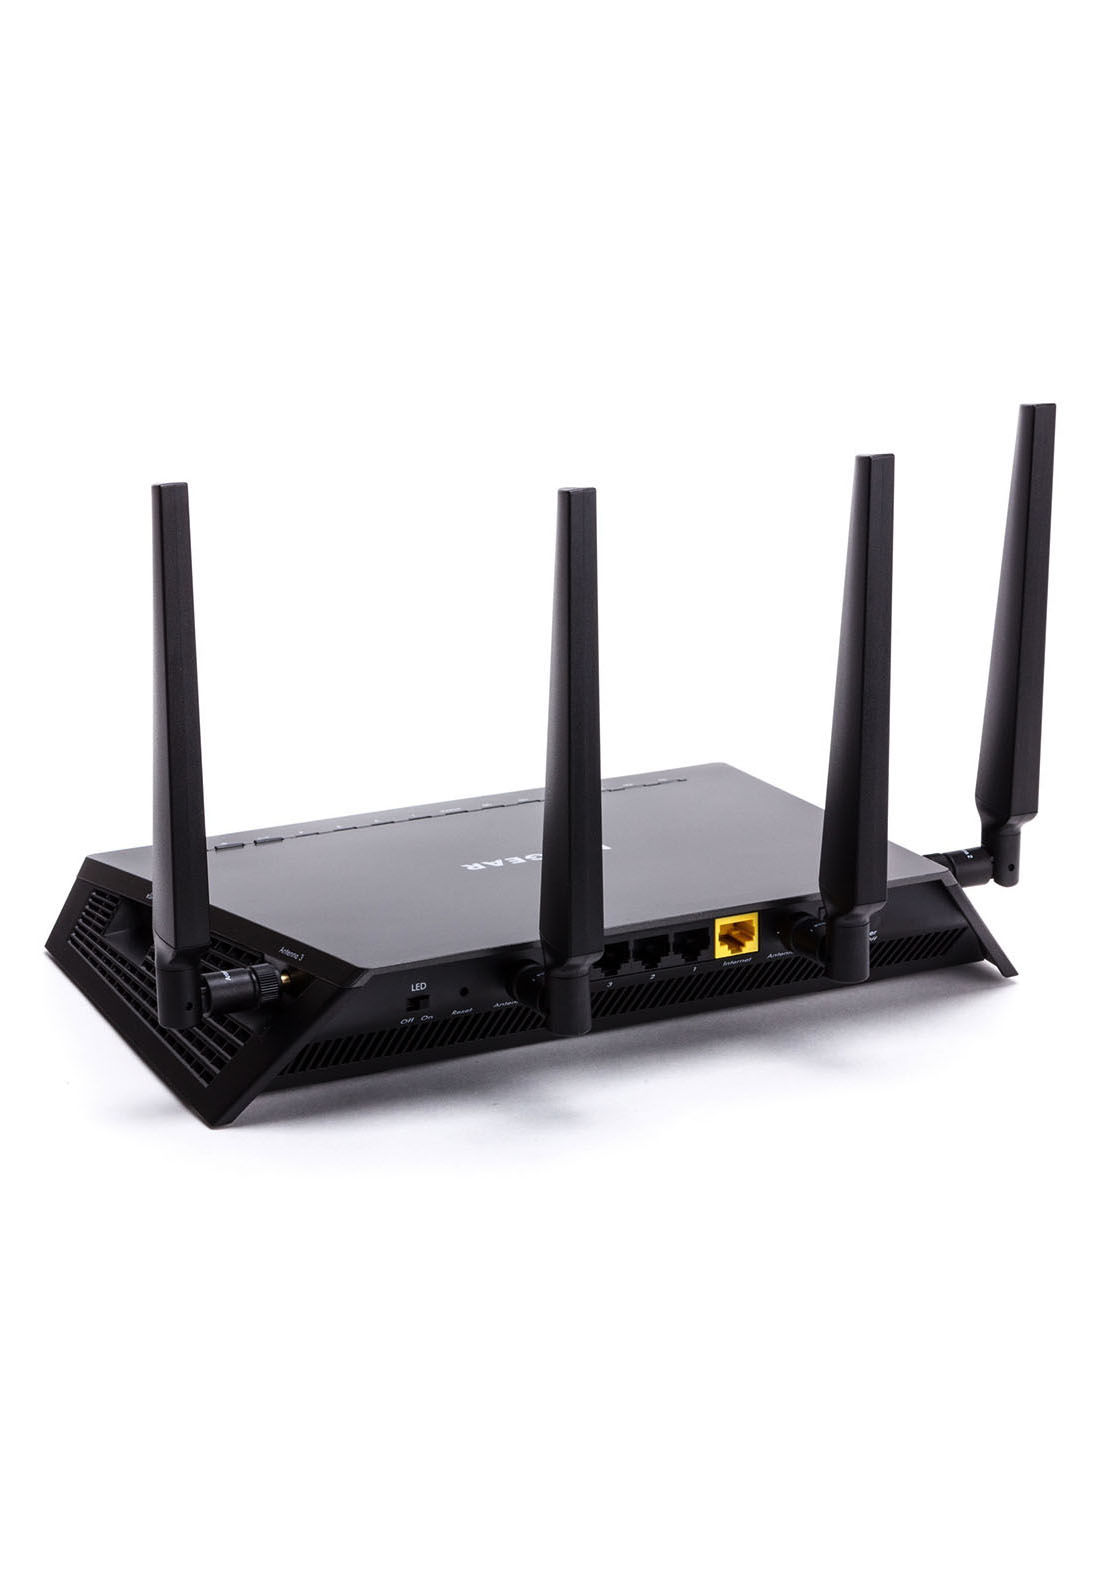 Nighthawk X4S R7800, AC2600 Smart WiFi Router